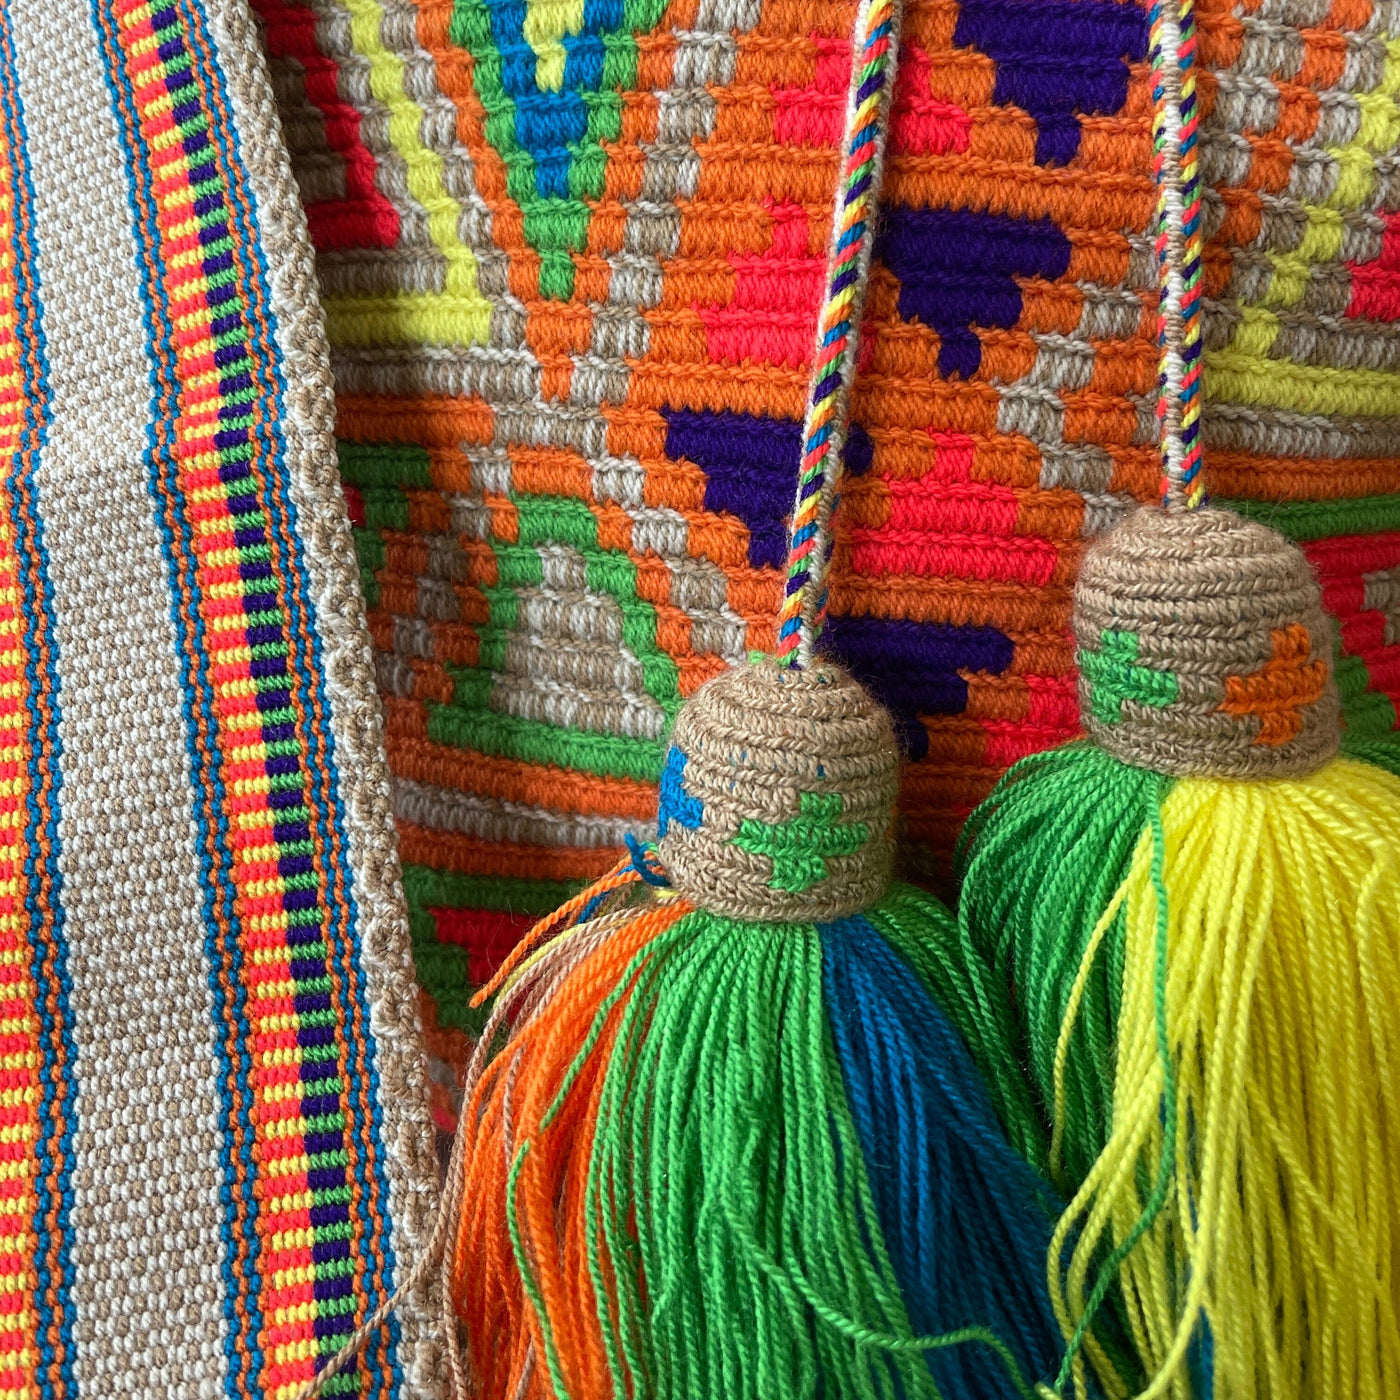 details Neon Orange Boho Beach Bag for summer | Neon Colors Crochet Bag | Colorful 4u